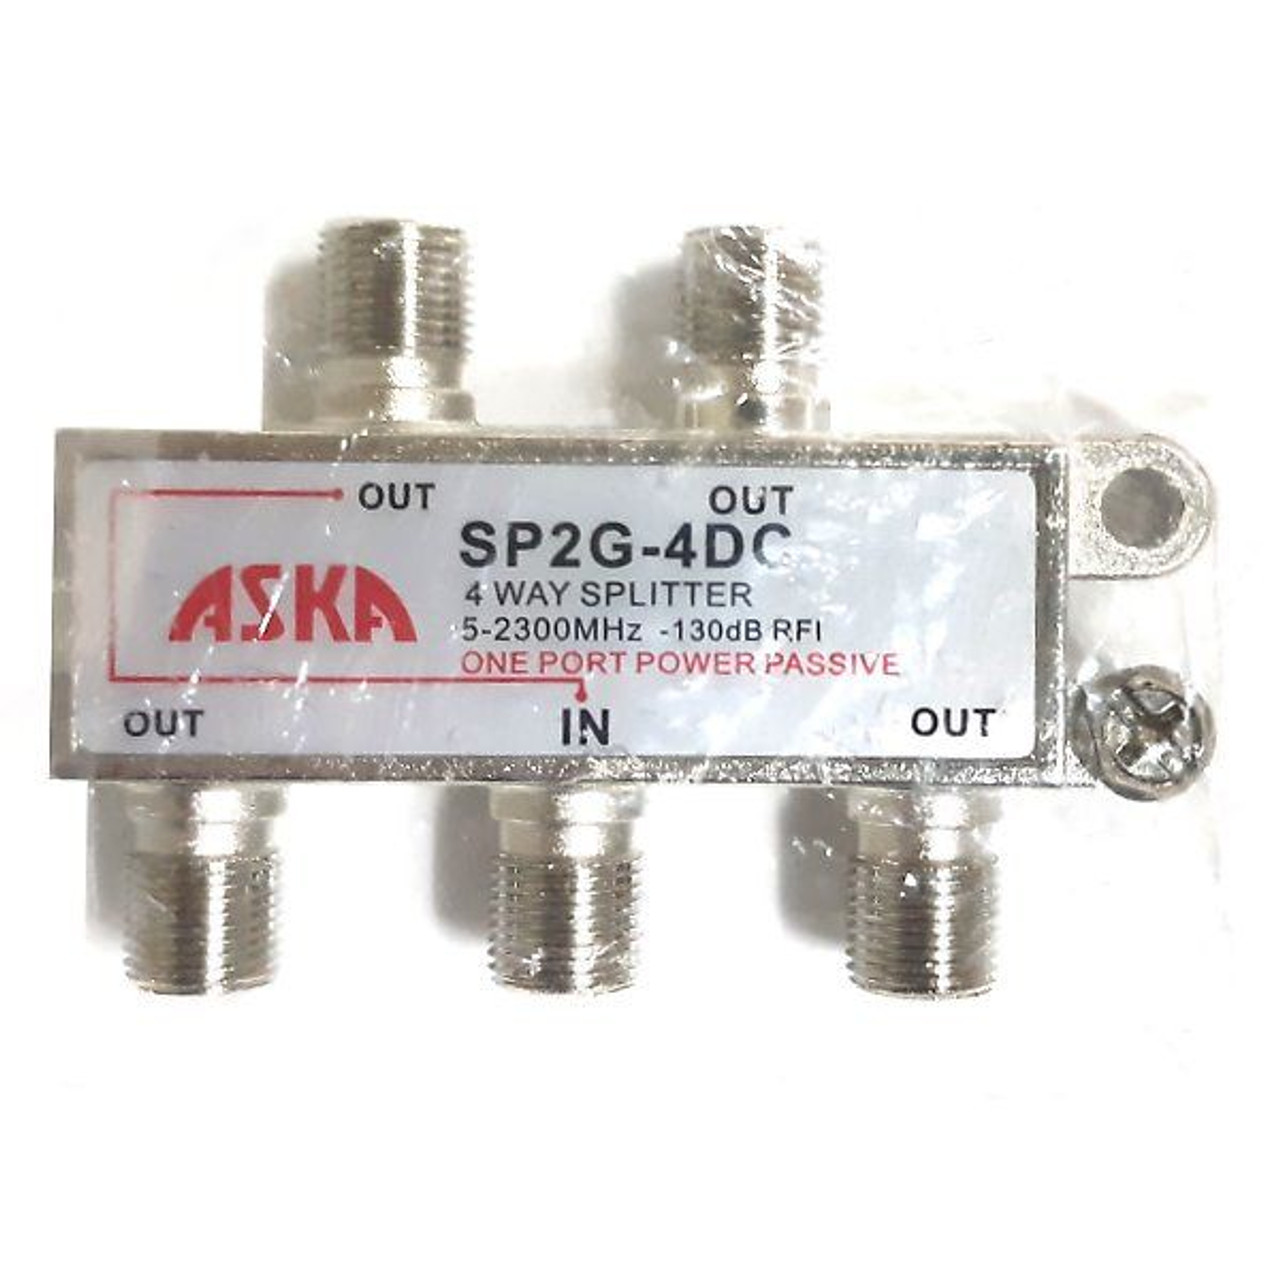 ASKA SP2G-4DC 4-Way Wideband Satellite Splitter 1 Port Power Passive 5-2300 MHz Satellite CATV Off-Air Signals UHF/VHF Video Splitter, Part # SP2G-4DC